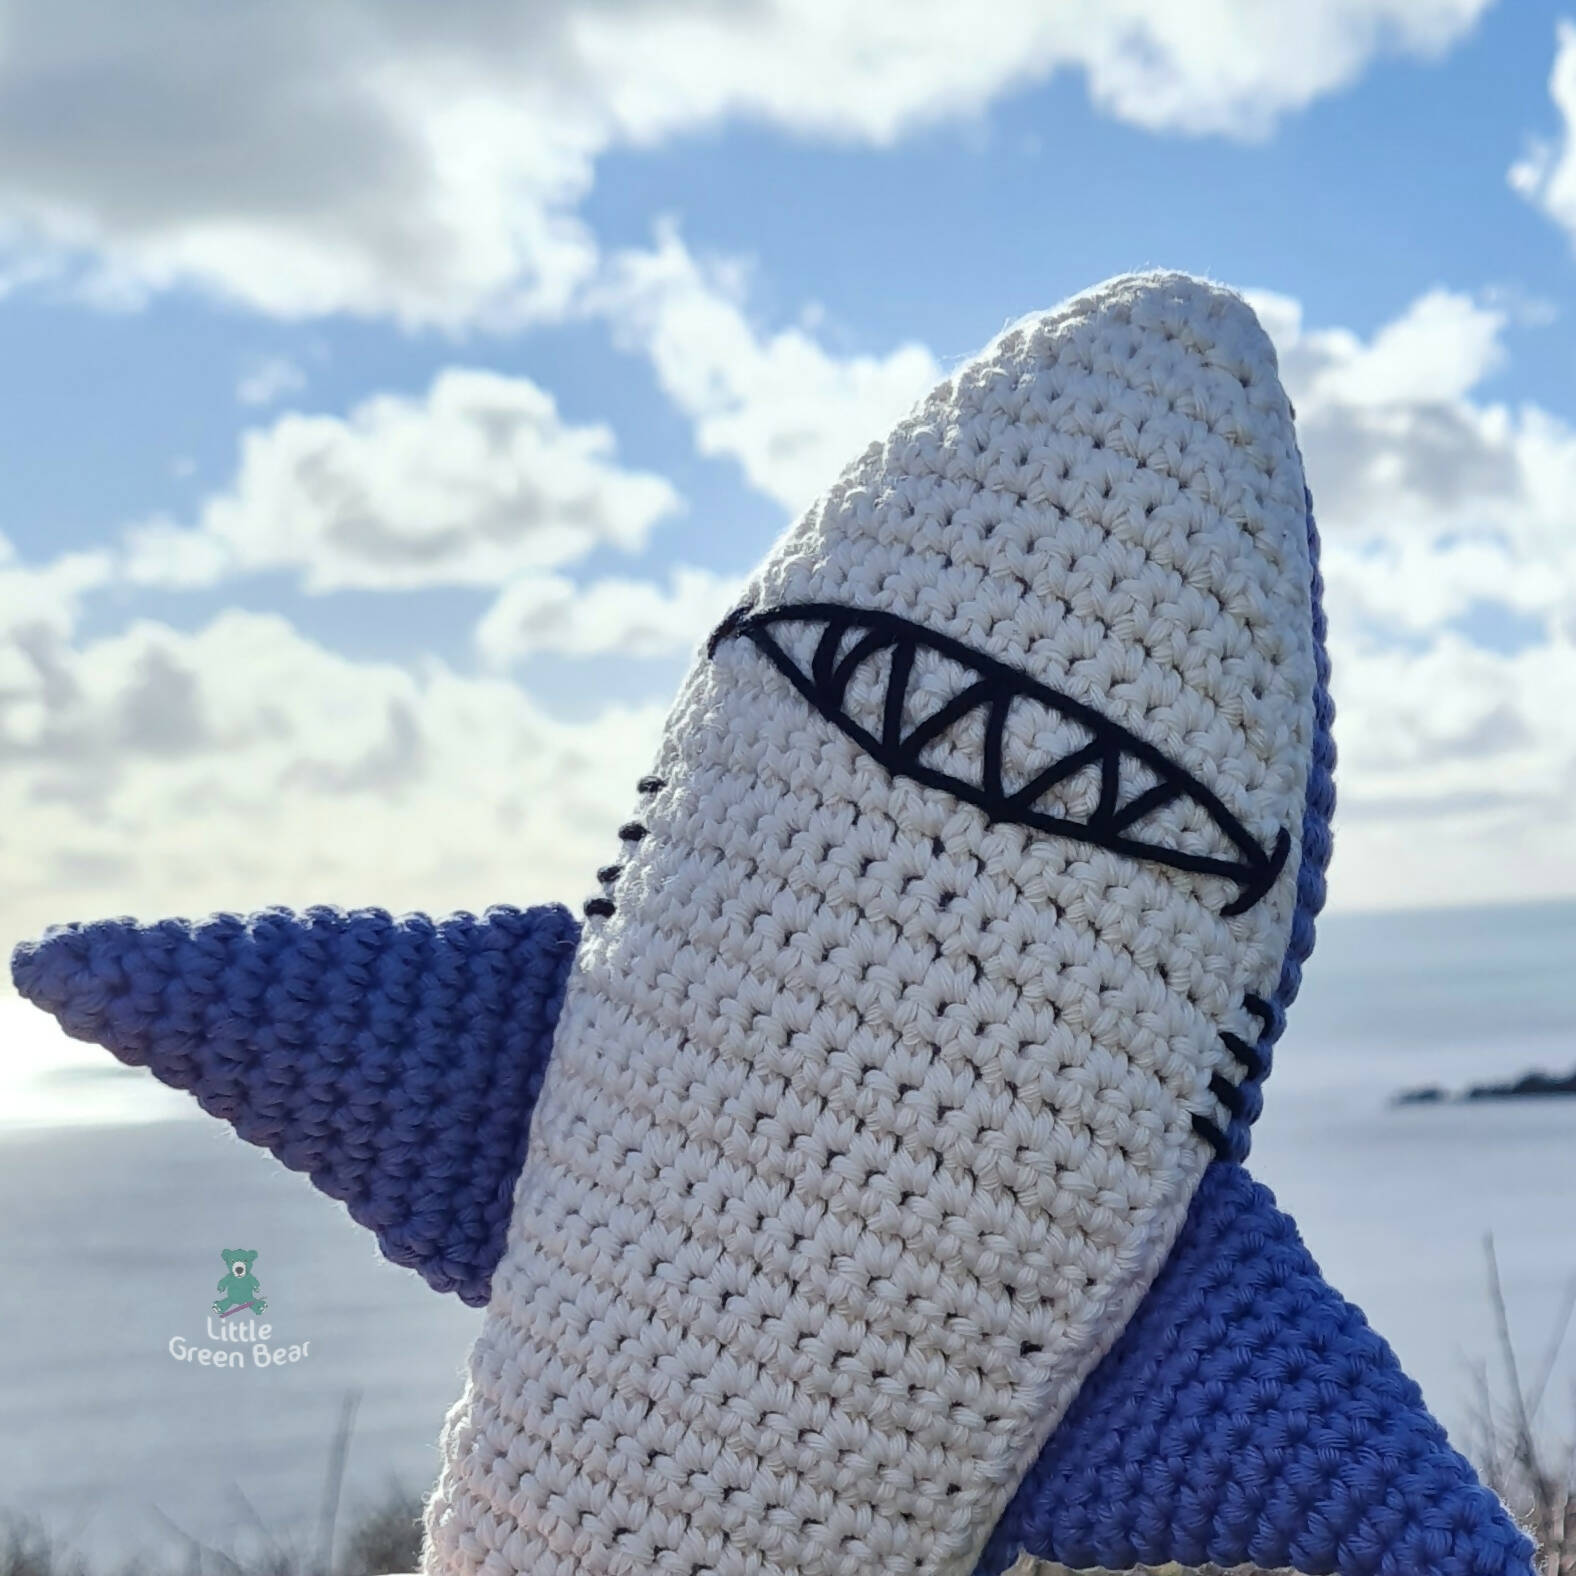 PDF Shark Crochet Pattern, Shane the Shark Crochet Pattern, Shark Amigurumi Pattern, Shark Crochet Toy Pattern